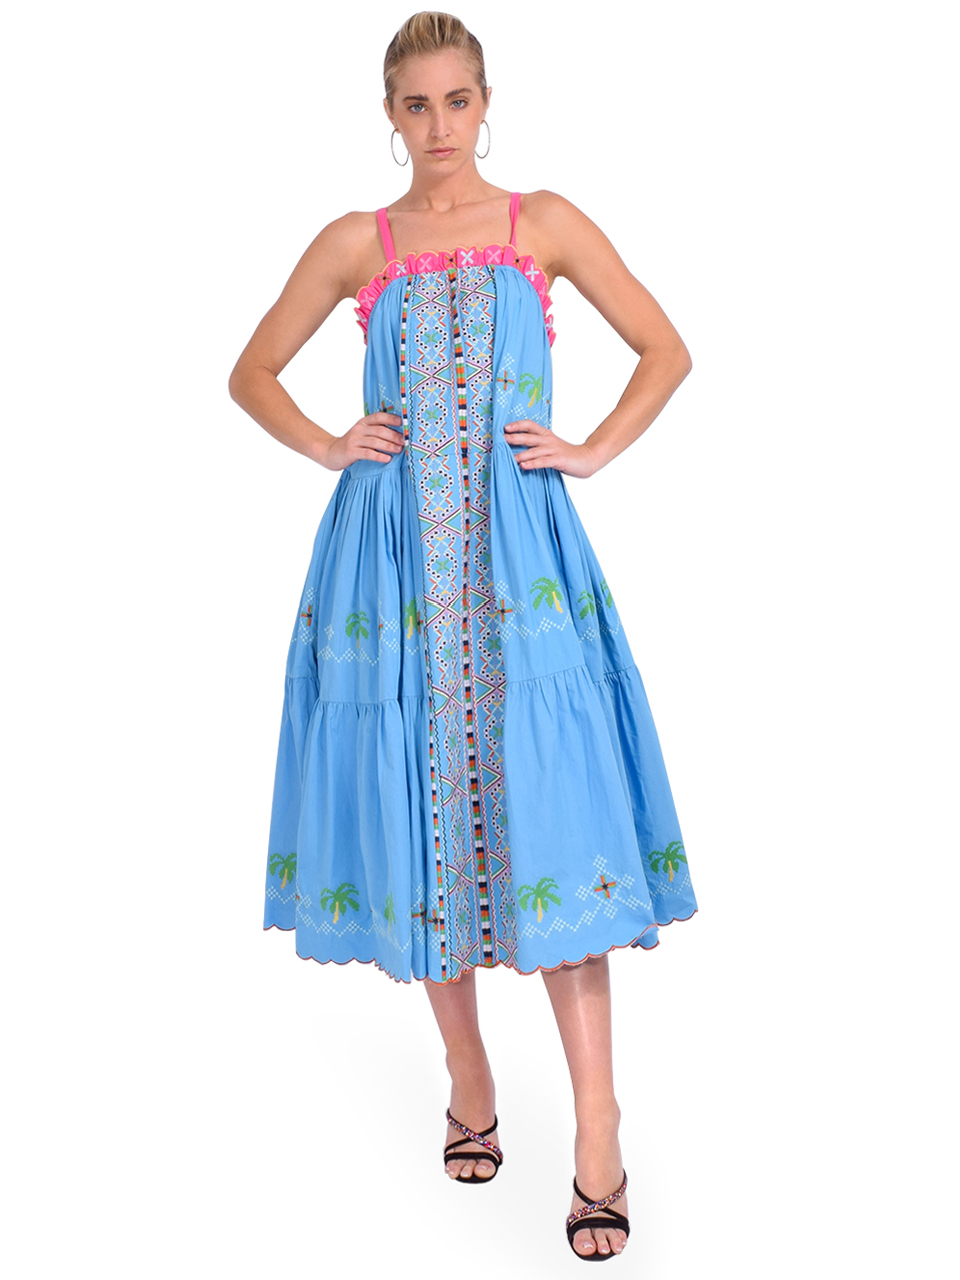 RUE DE LA LUNE Hortensia Embroidered Dress in Blue Front View 2
